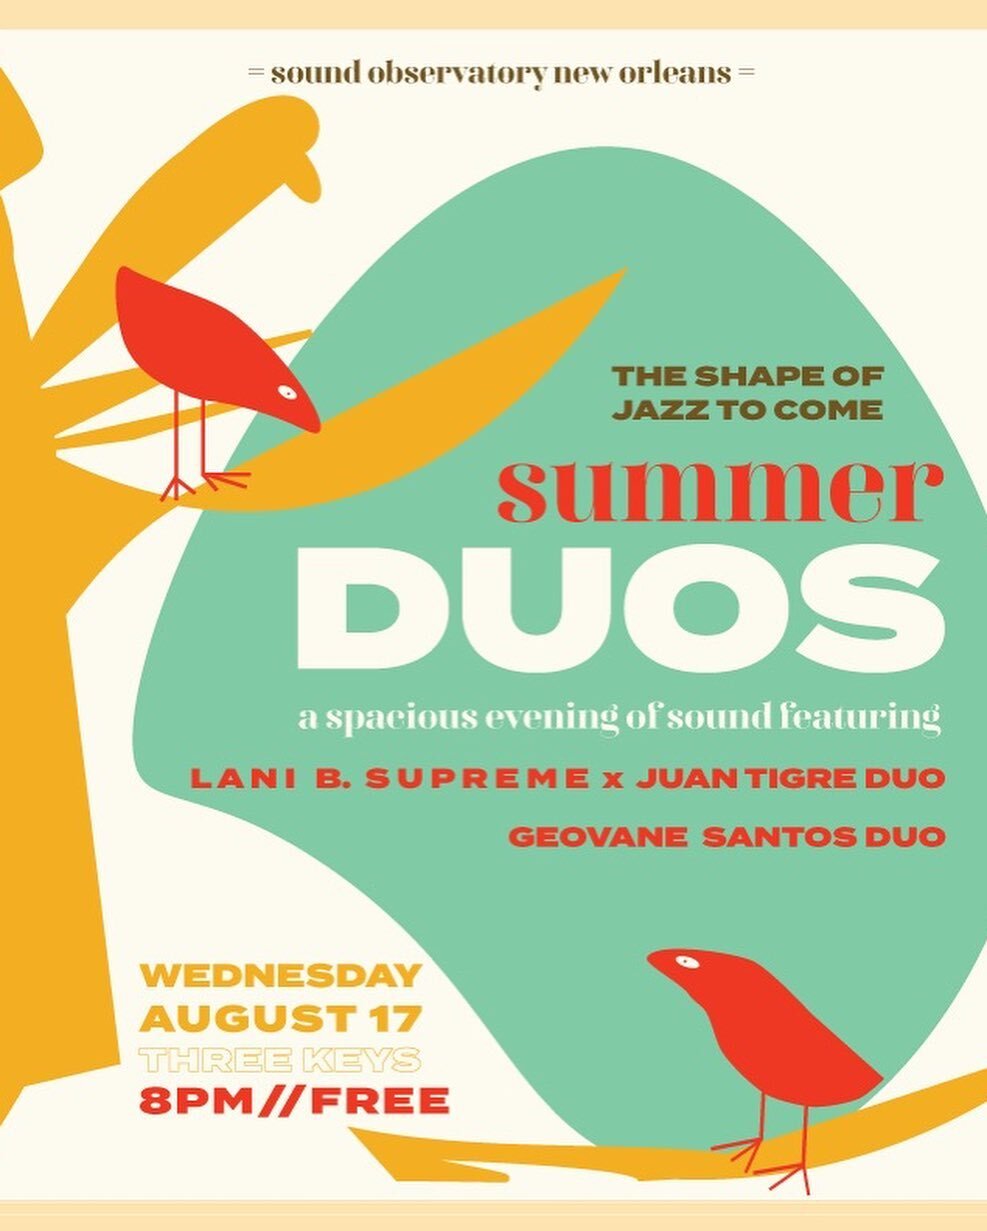 cool spacious duos mark this august edition of #sojtc - @jelanibauman @juantigrerocks  @gpstheguitarist 
come listen.